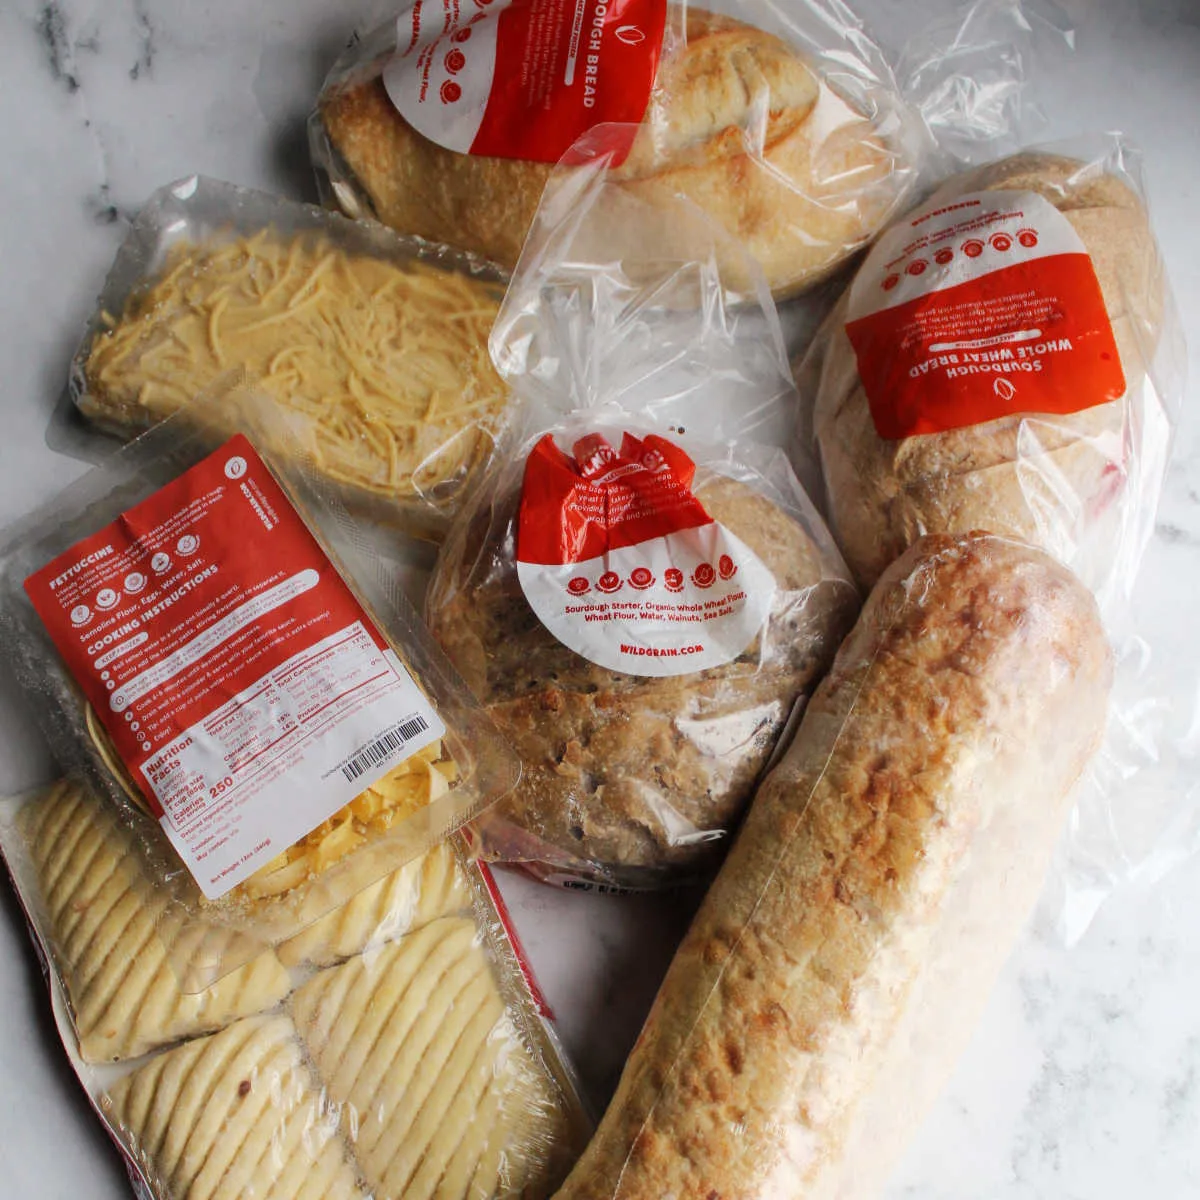 Frozen sourdough bread, croissant dough and pasta from Wildgrain's subscription service.